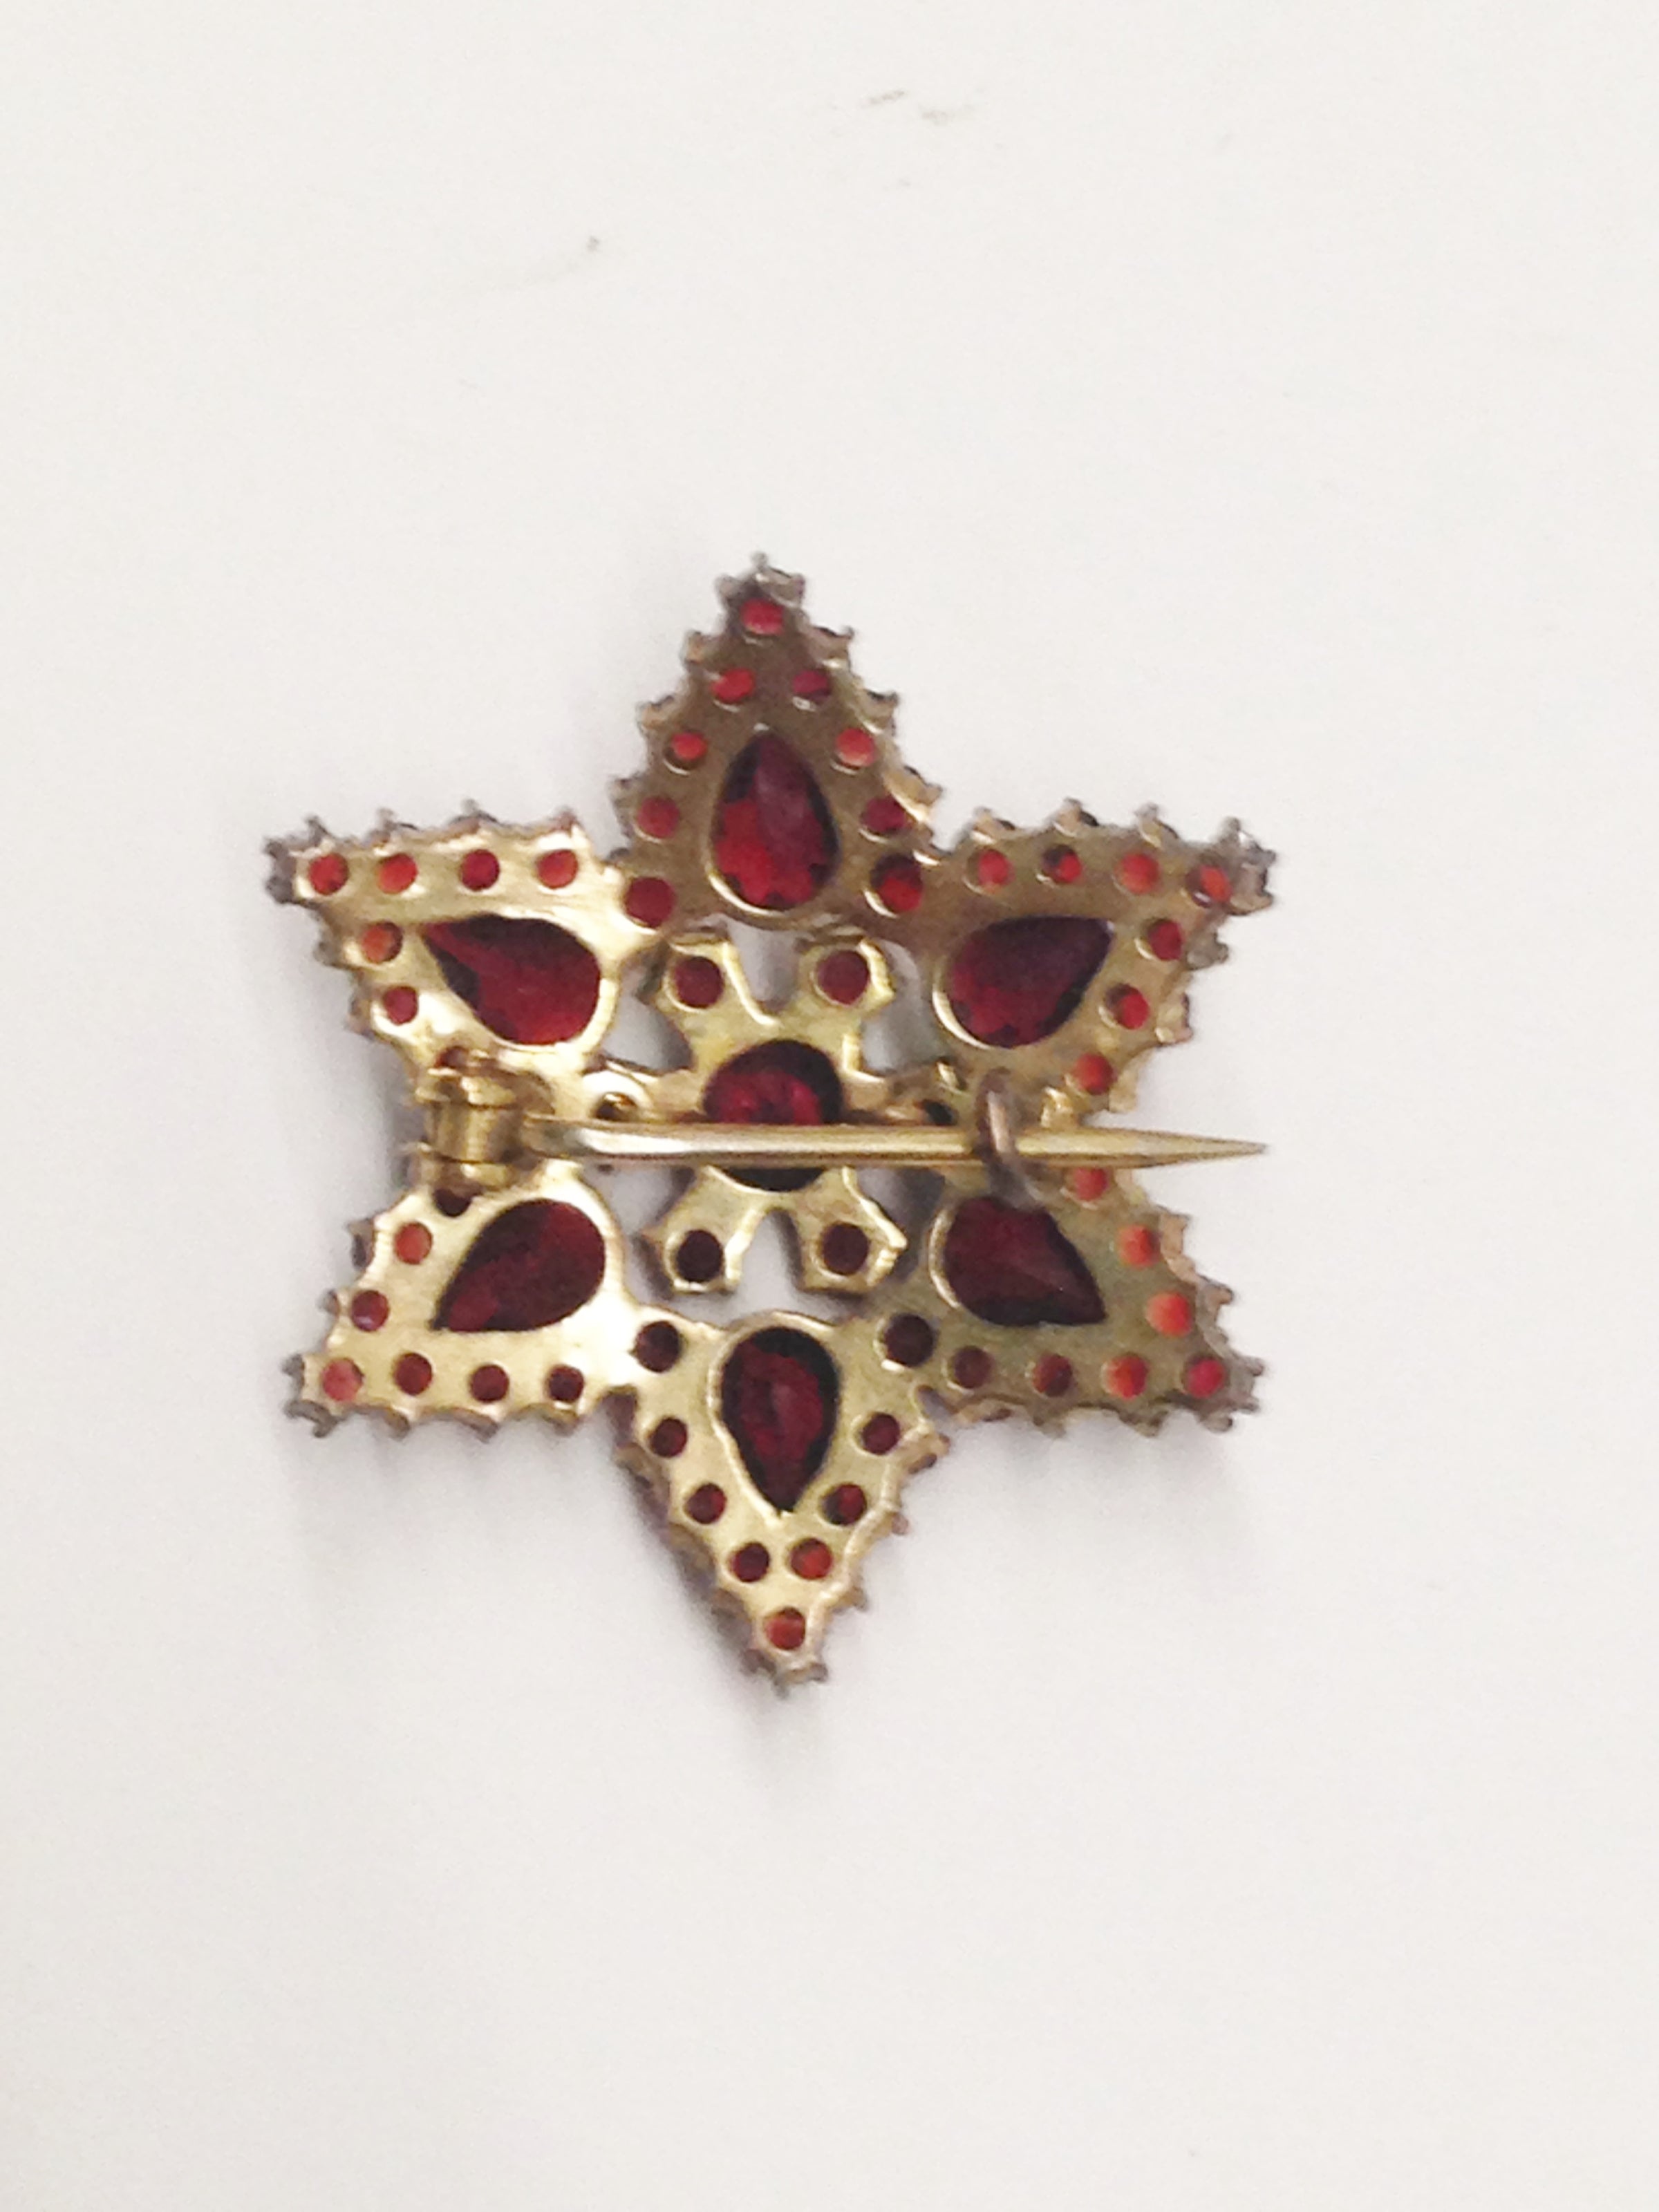 Antique Red Rhinestone Star Brooch Pin